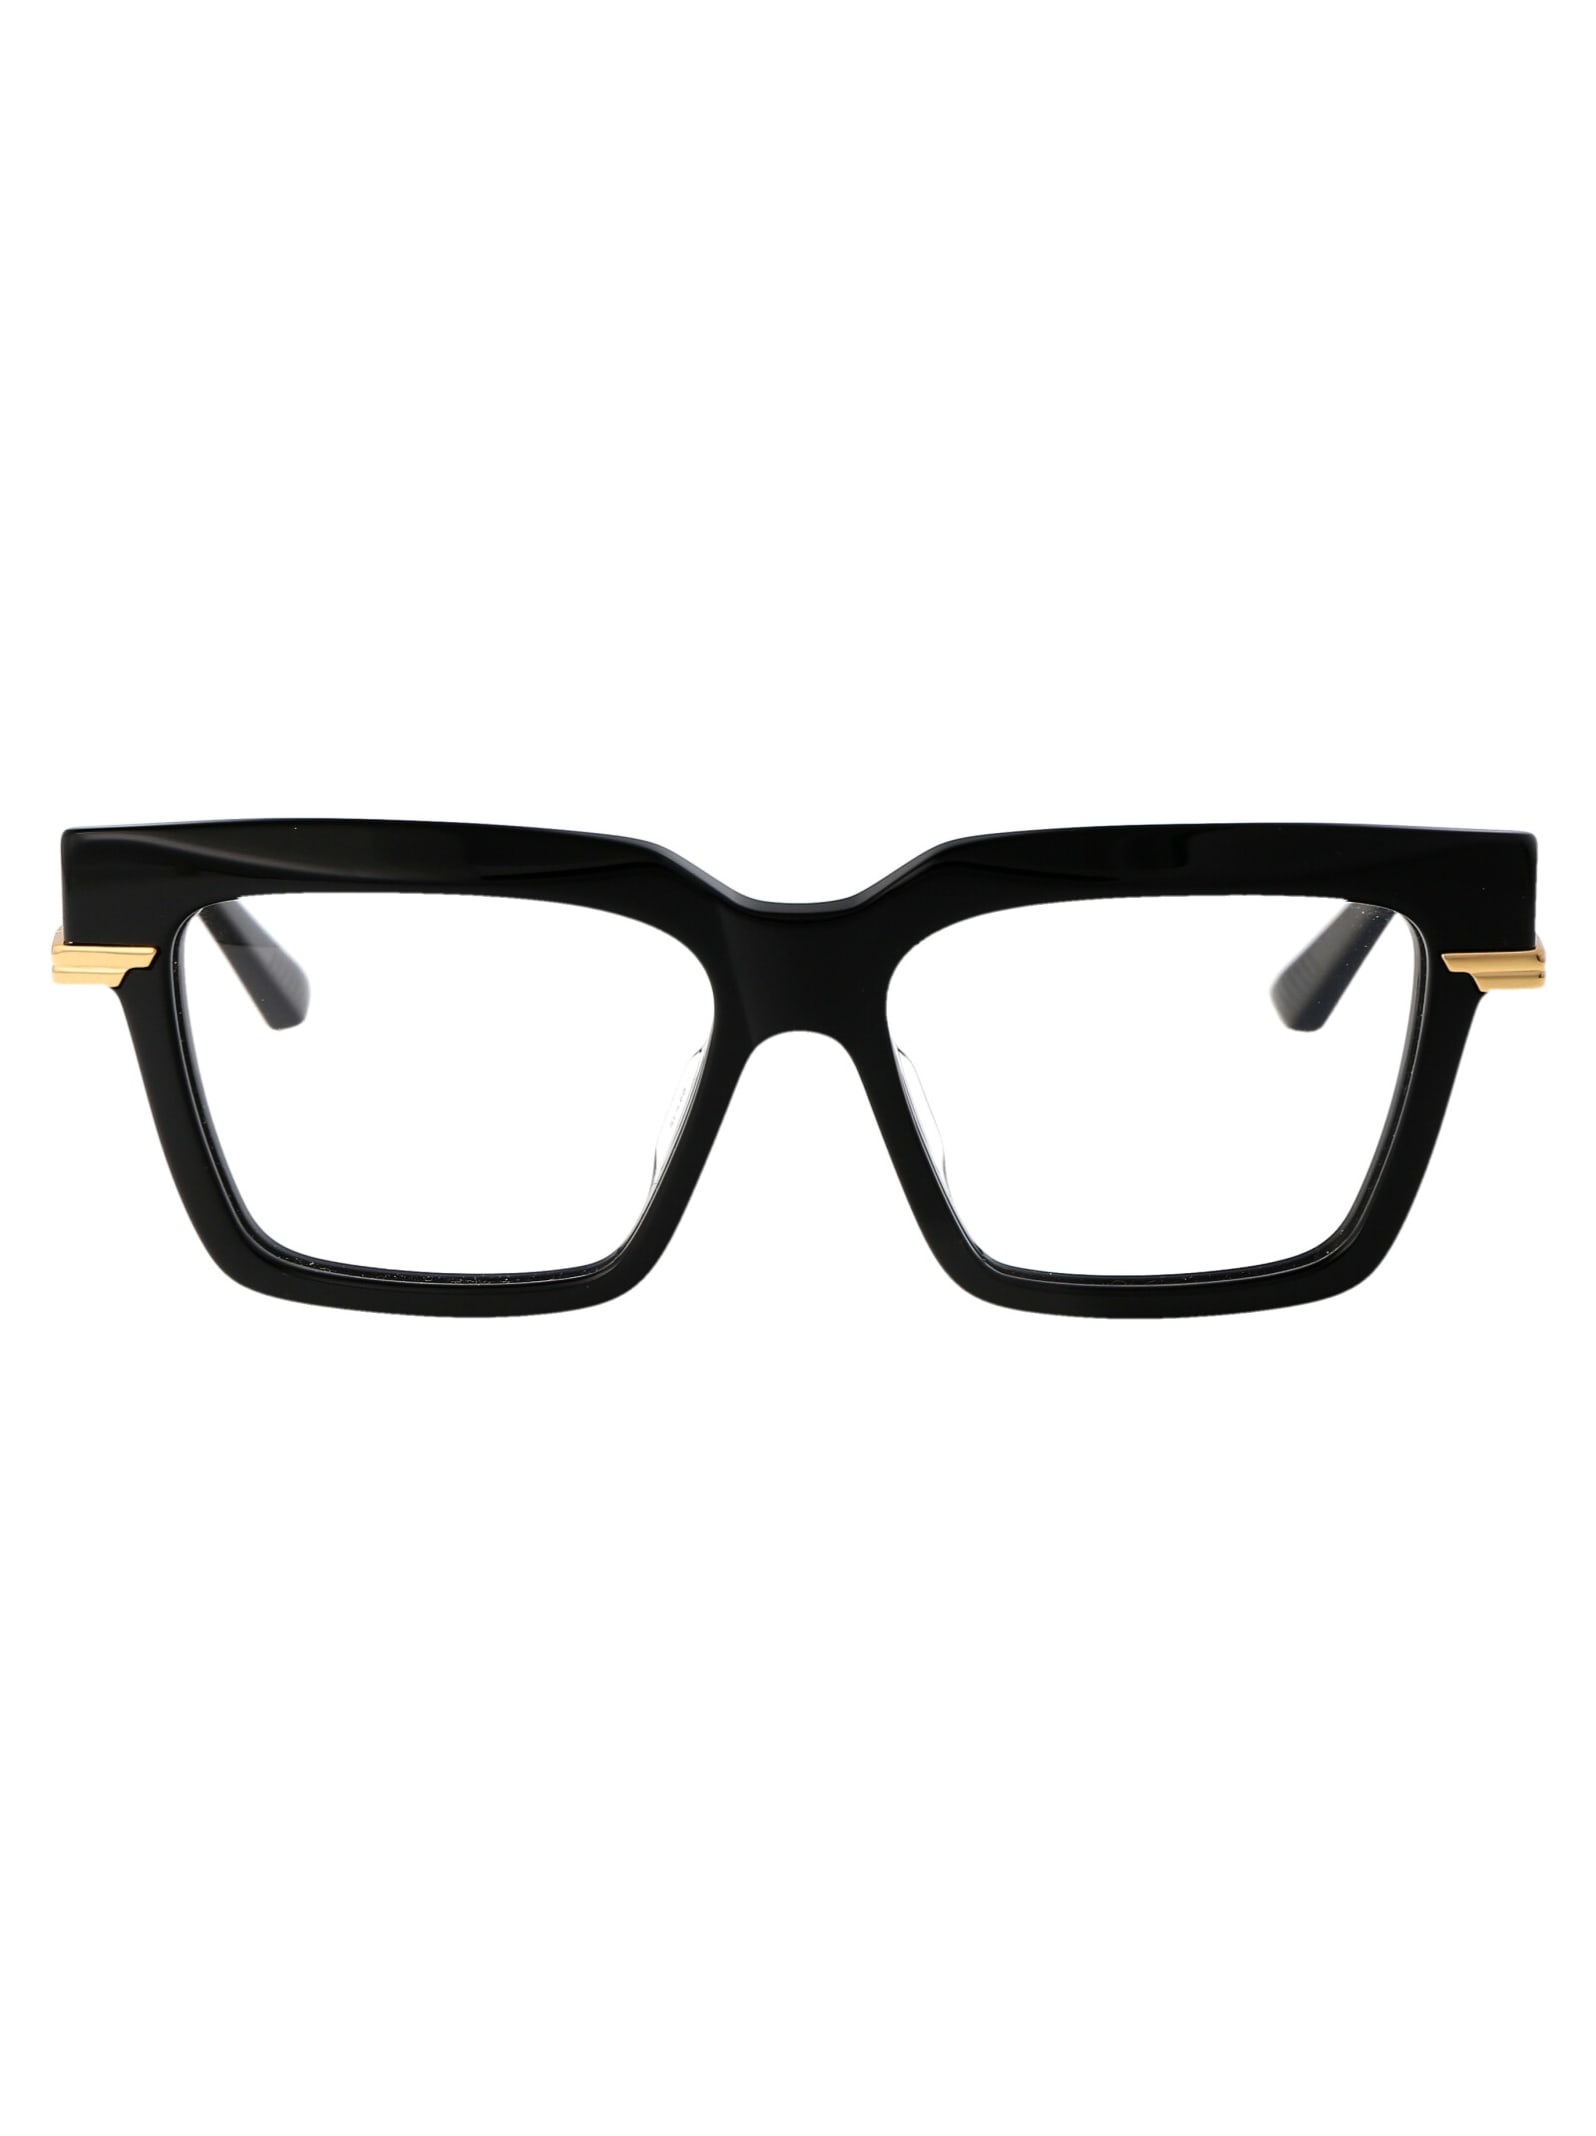 Bv1243o Glasses